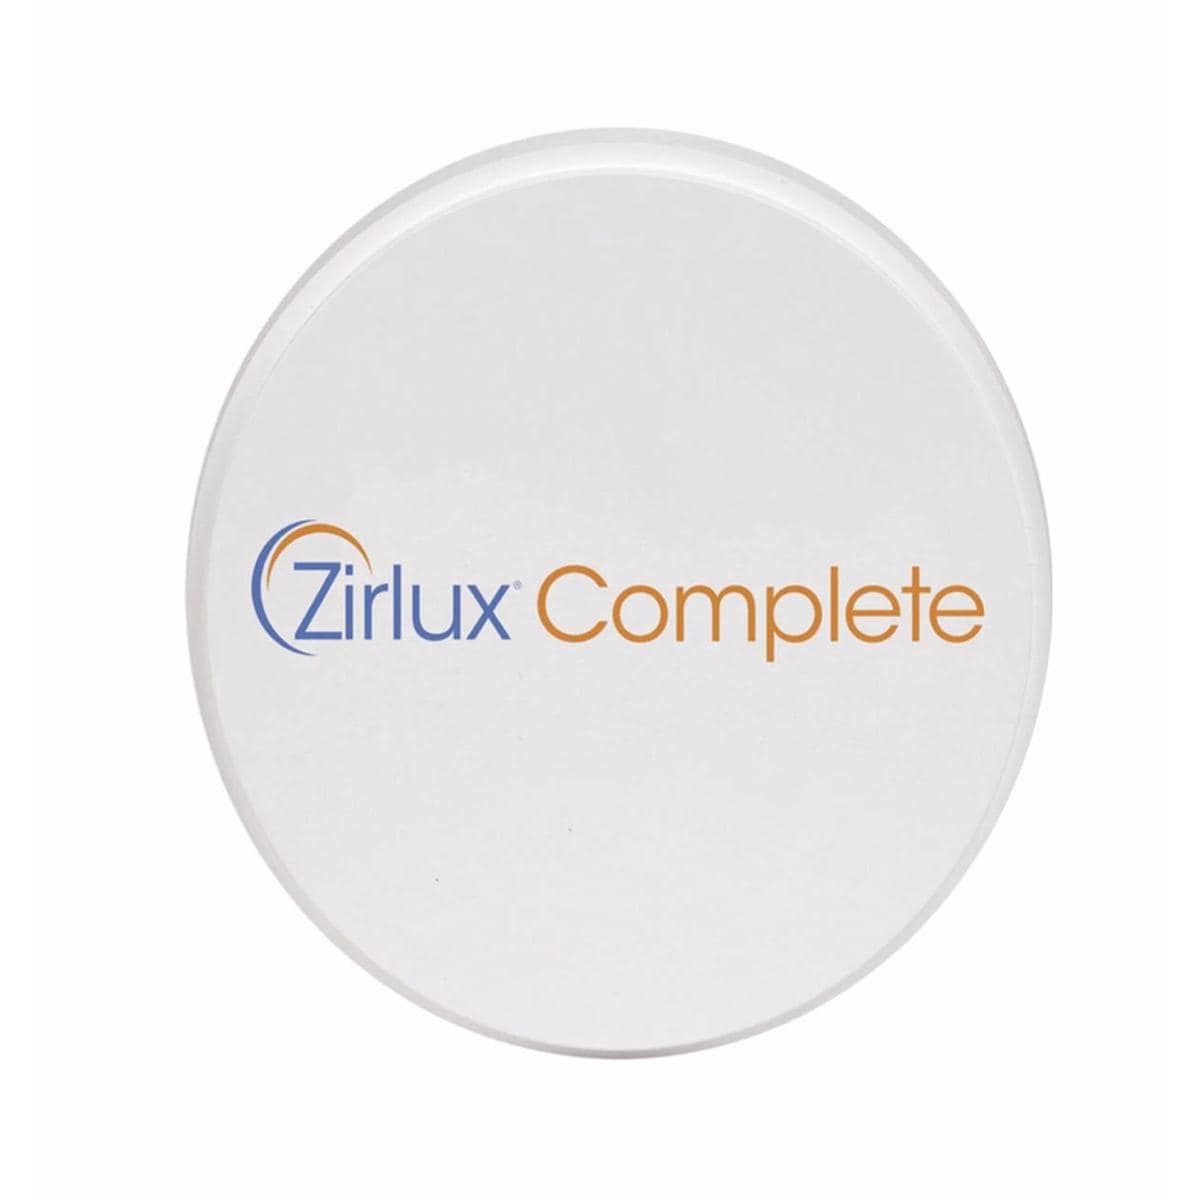 Zirlux Complete A3 98.5x22mm